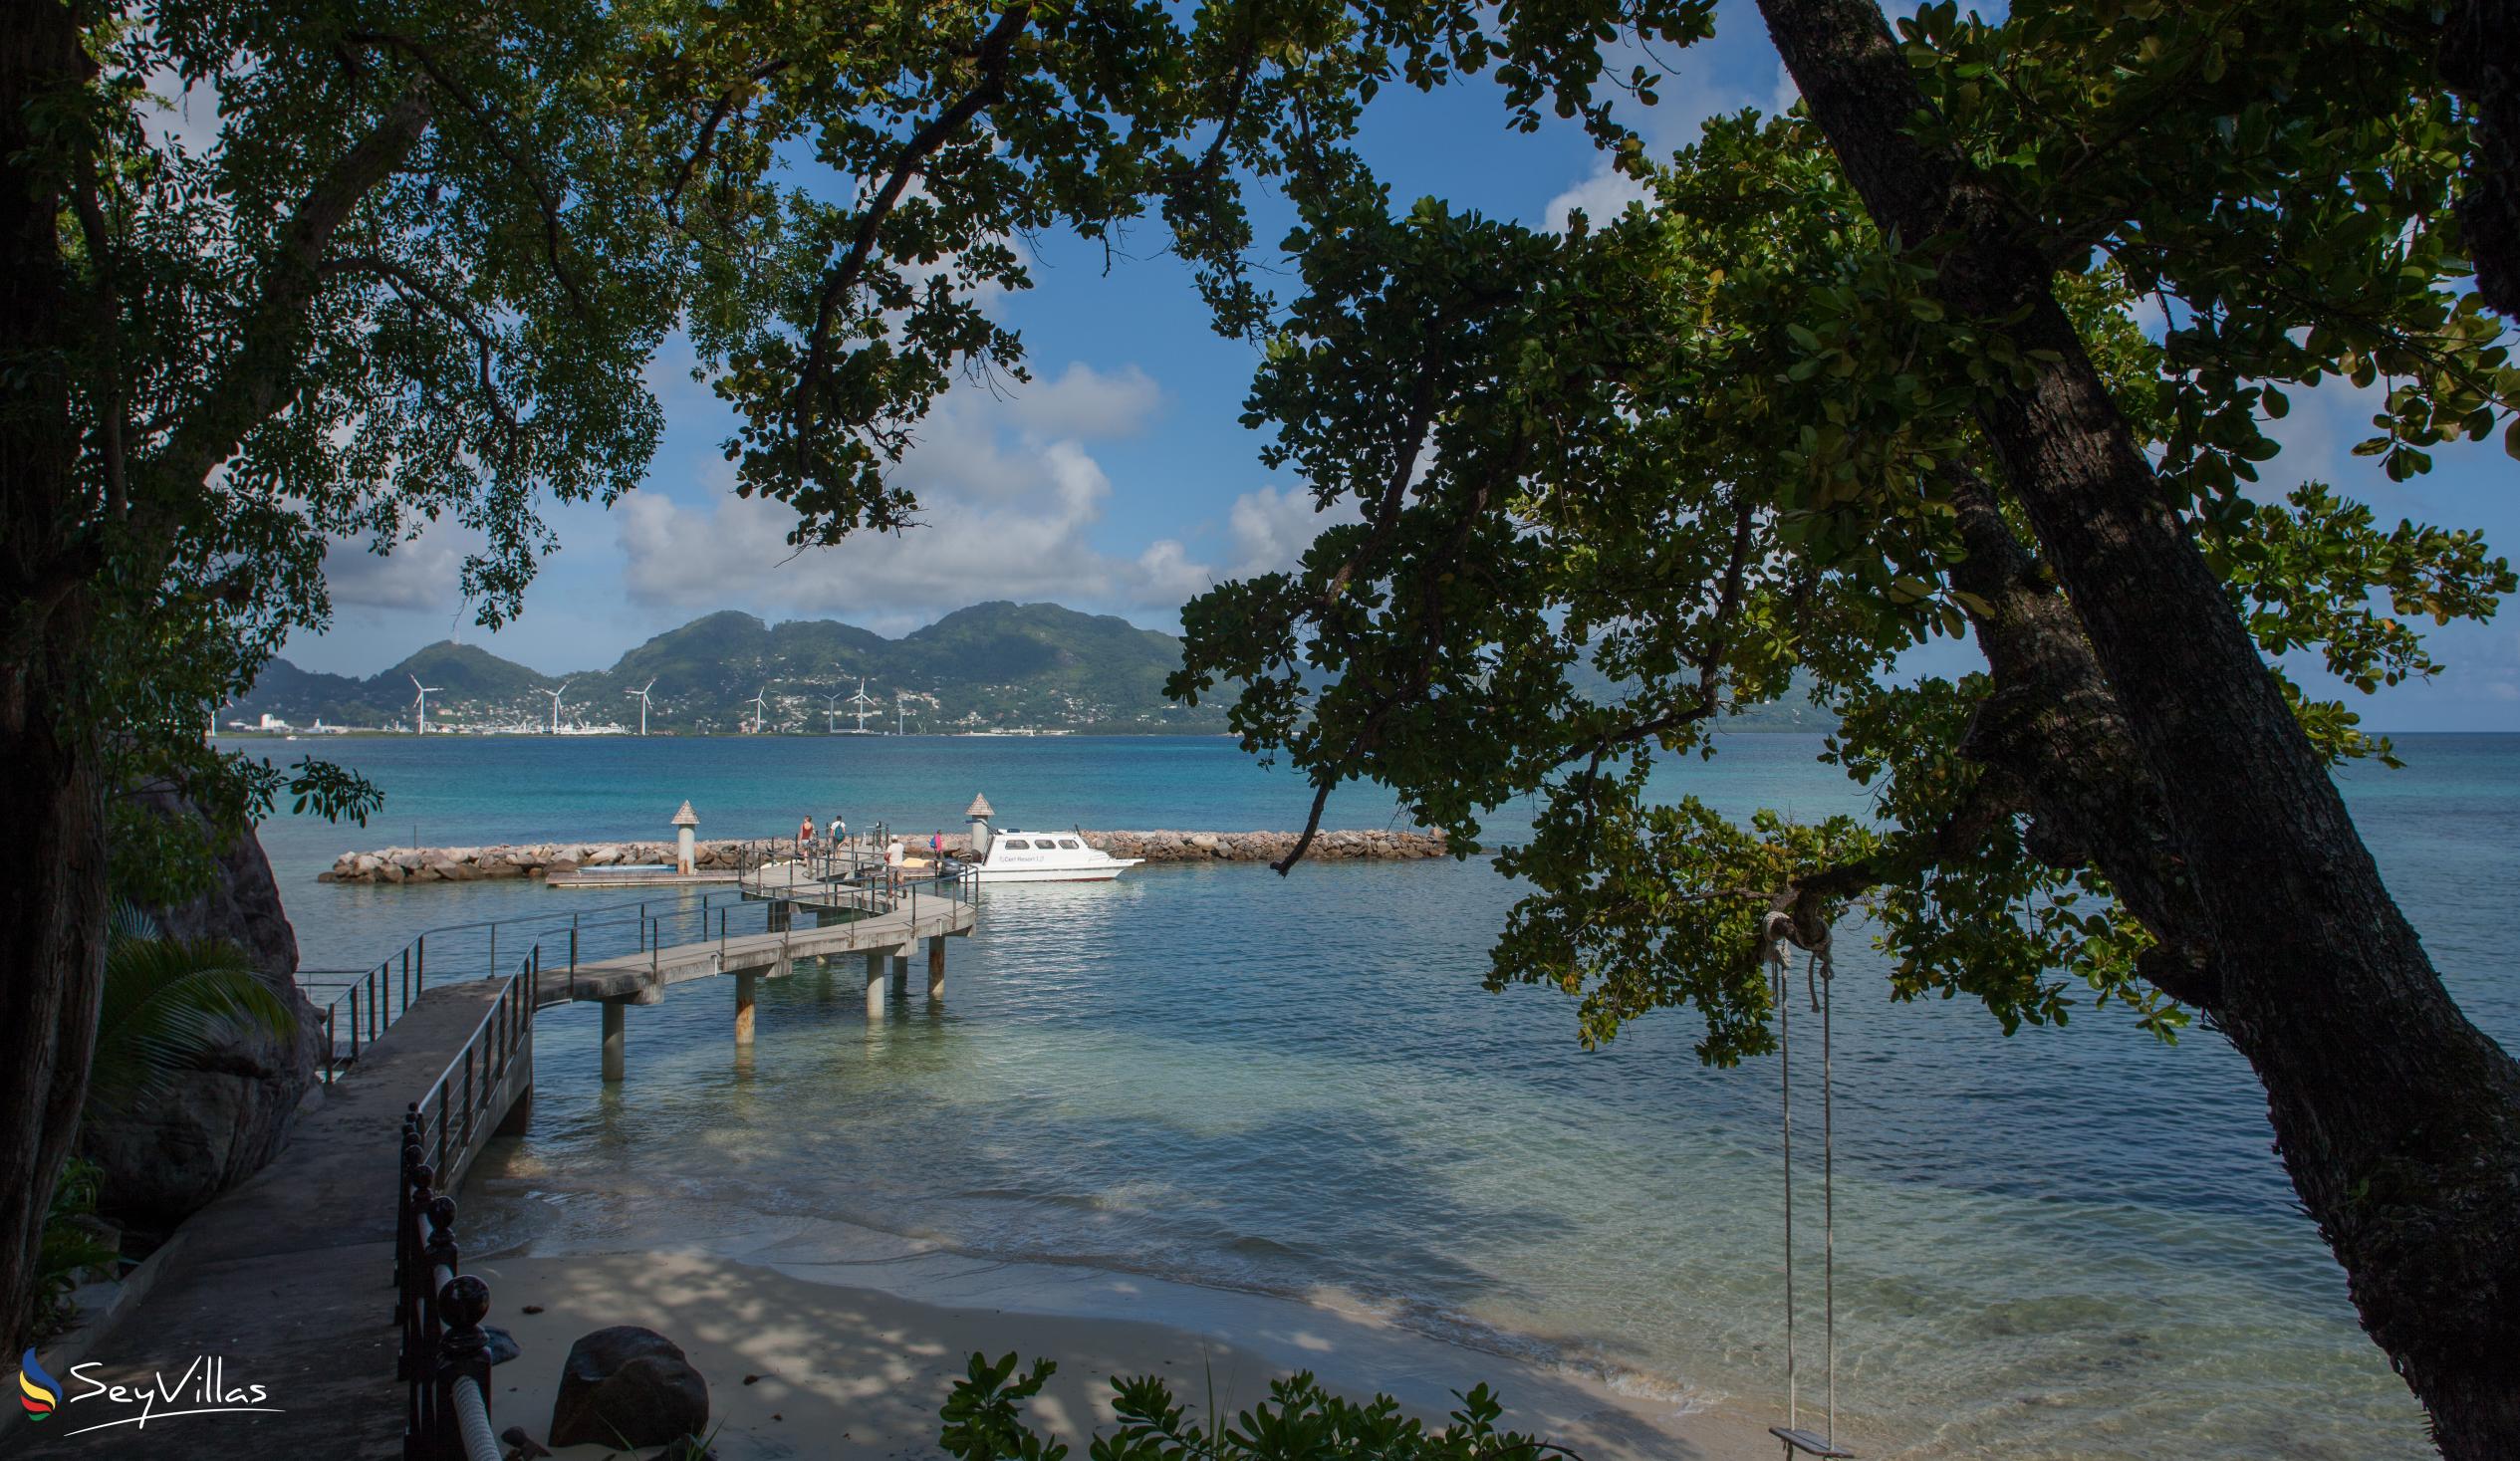 Photo 5: Cerf Island Resort - Location - Cerf Island (Seychelles)